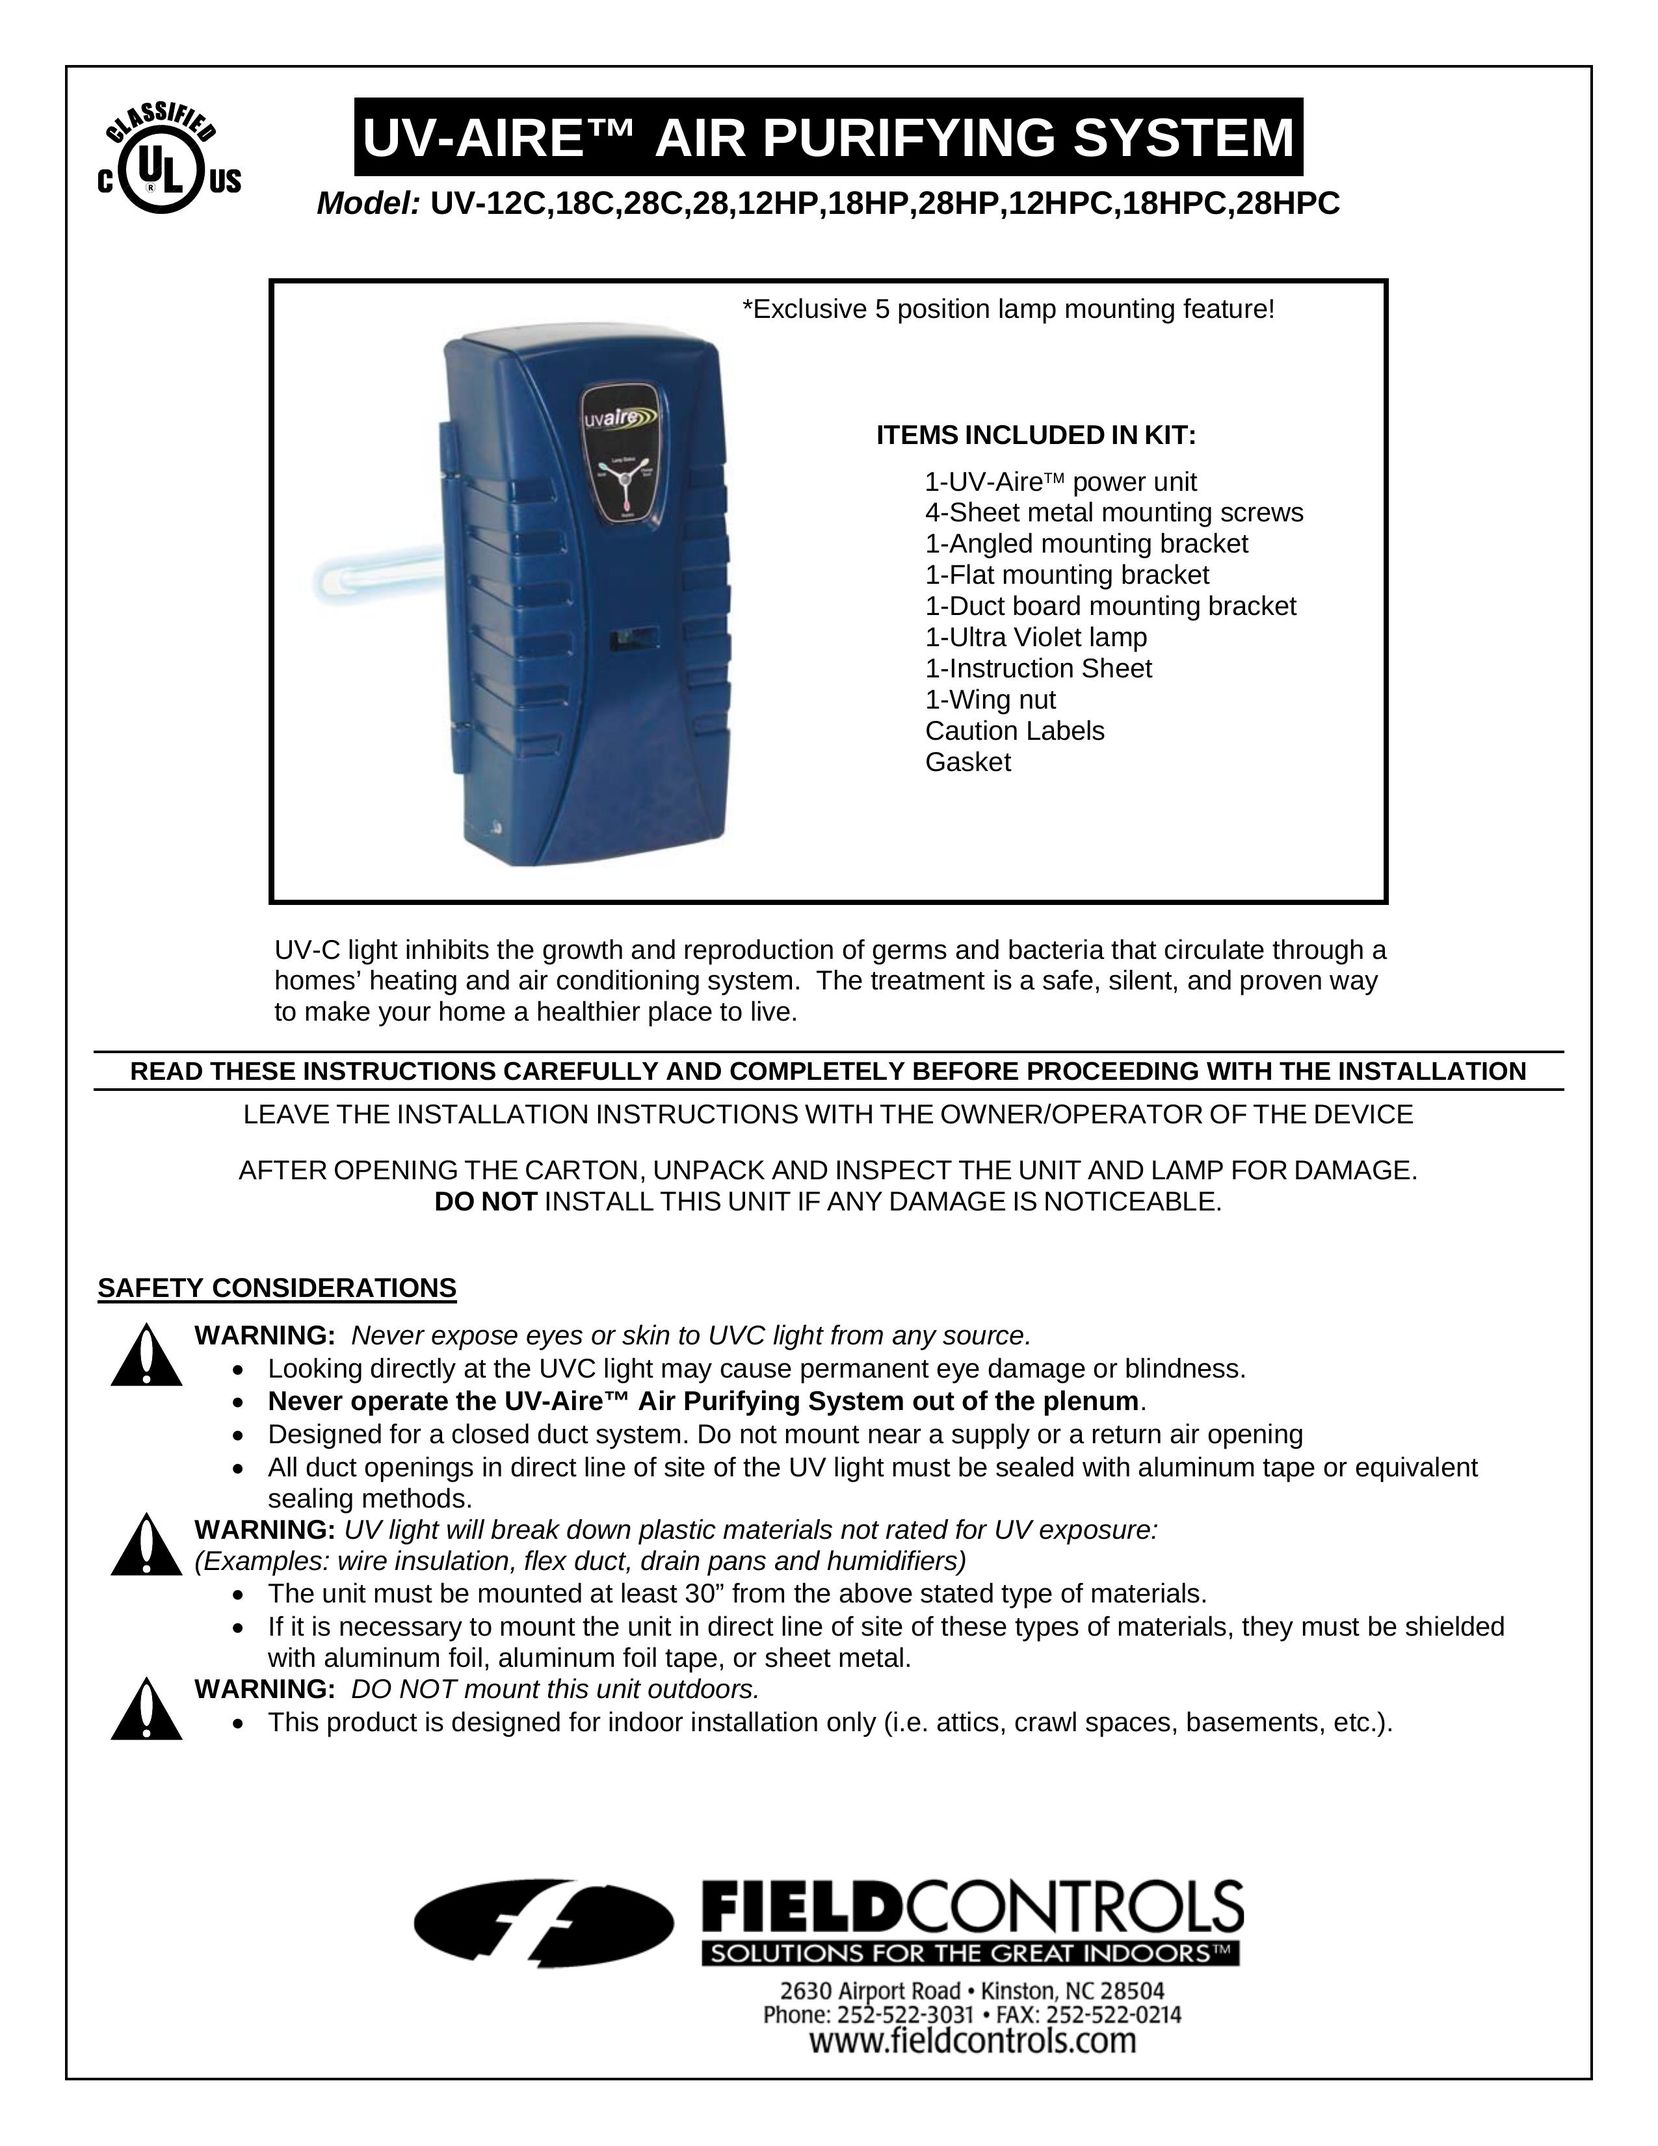 Field Controls UV-18HPC Air Cleaner User Manual